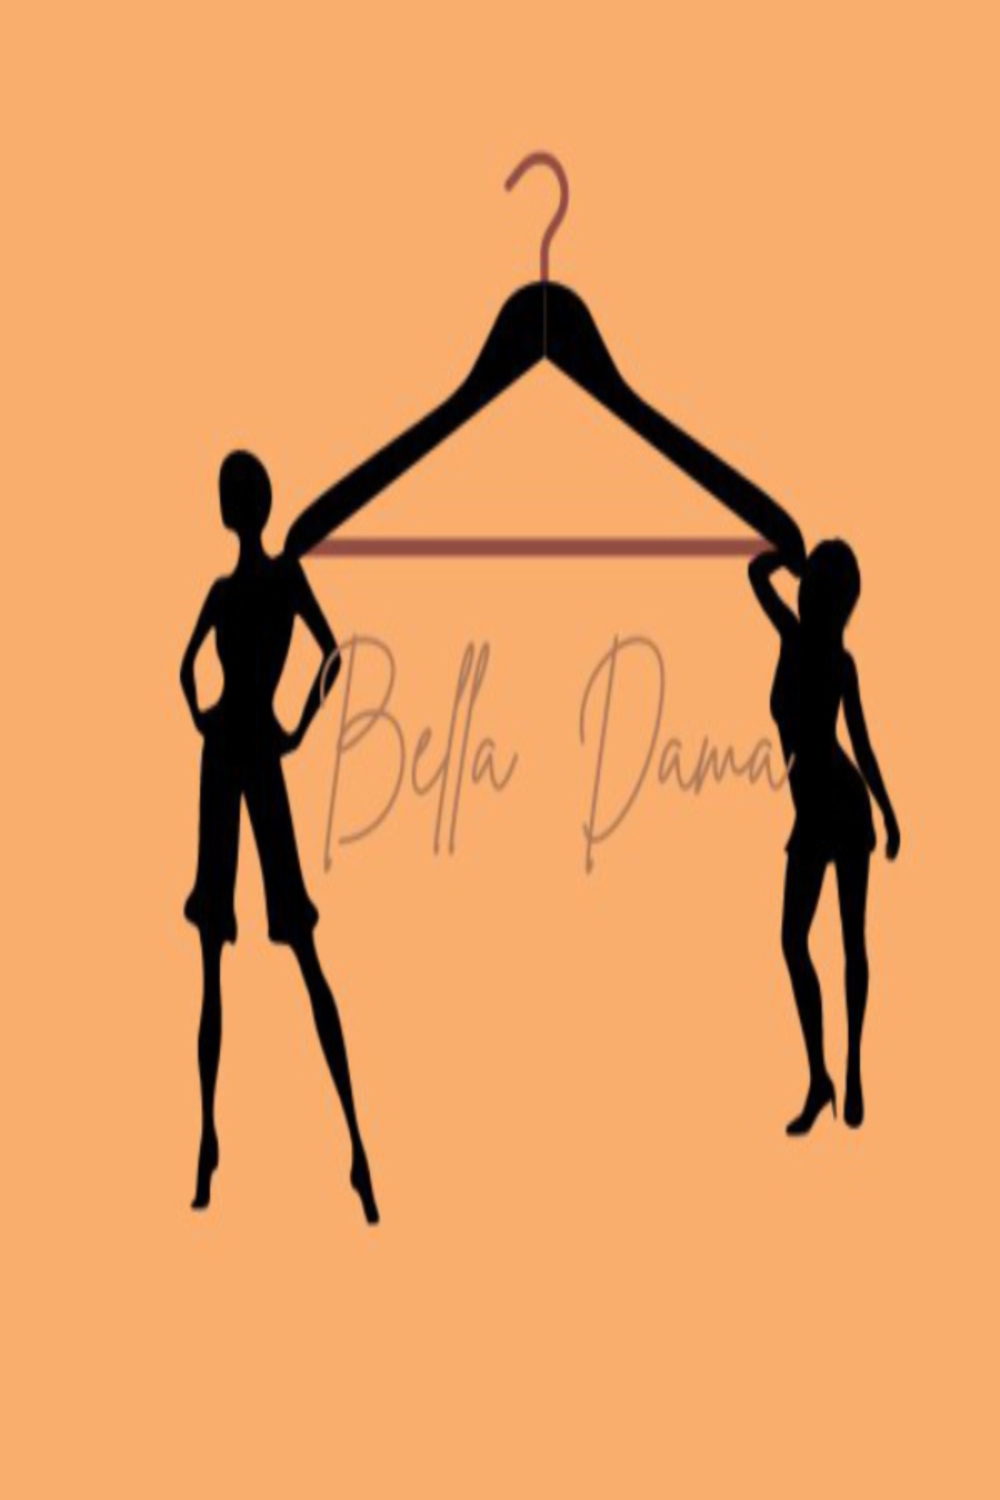 Bella Dama Clothing Logo Design pinterest preview image.